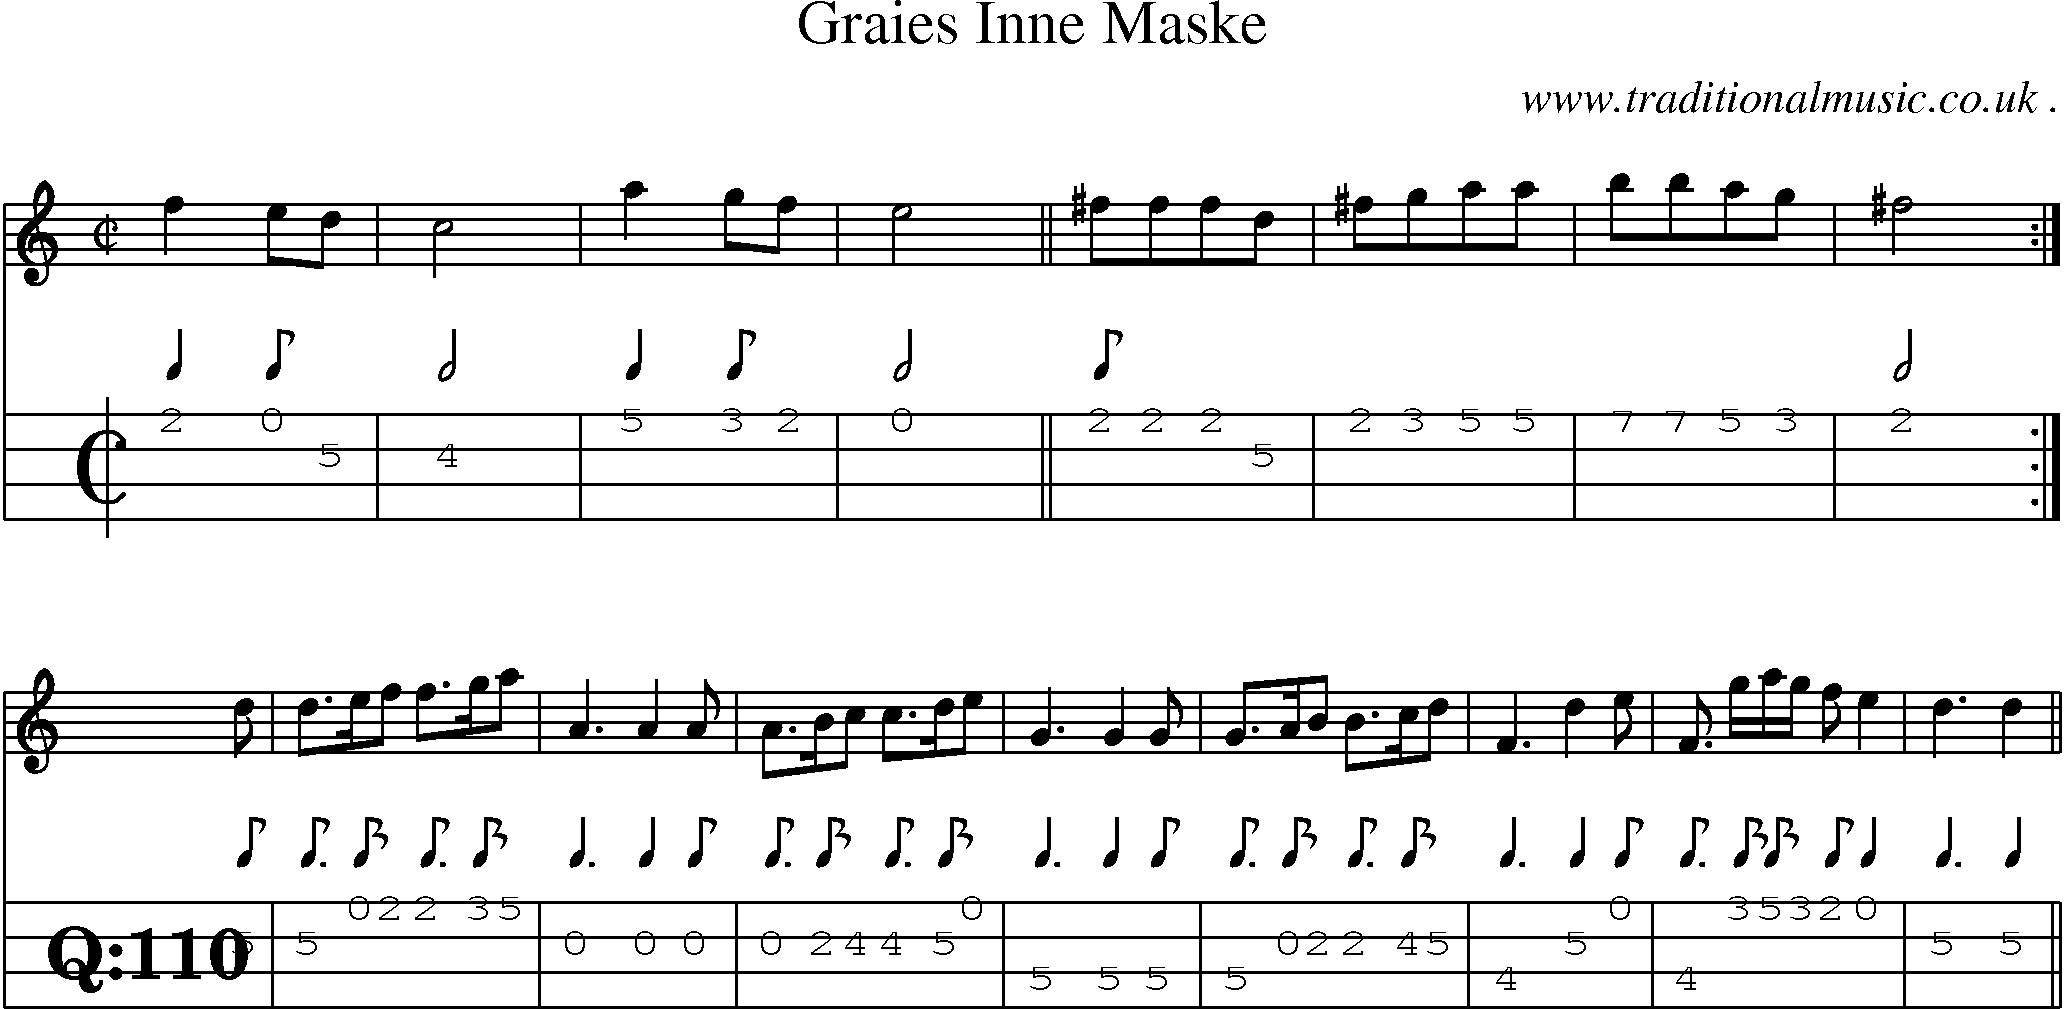 Sheet-music  score, Chords and Mandolin Tabs for Graies Inne Maske